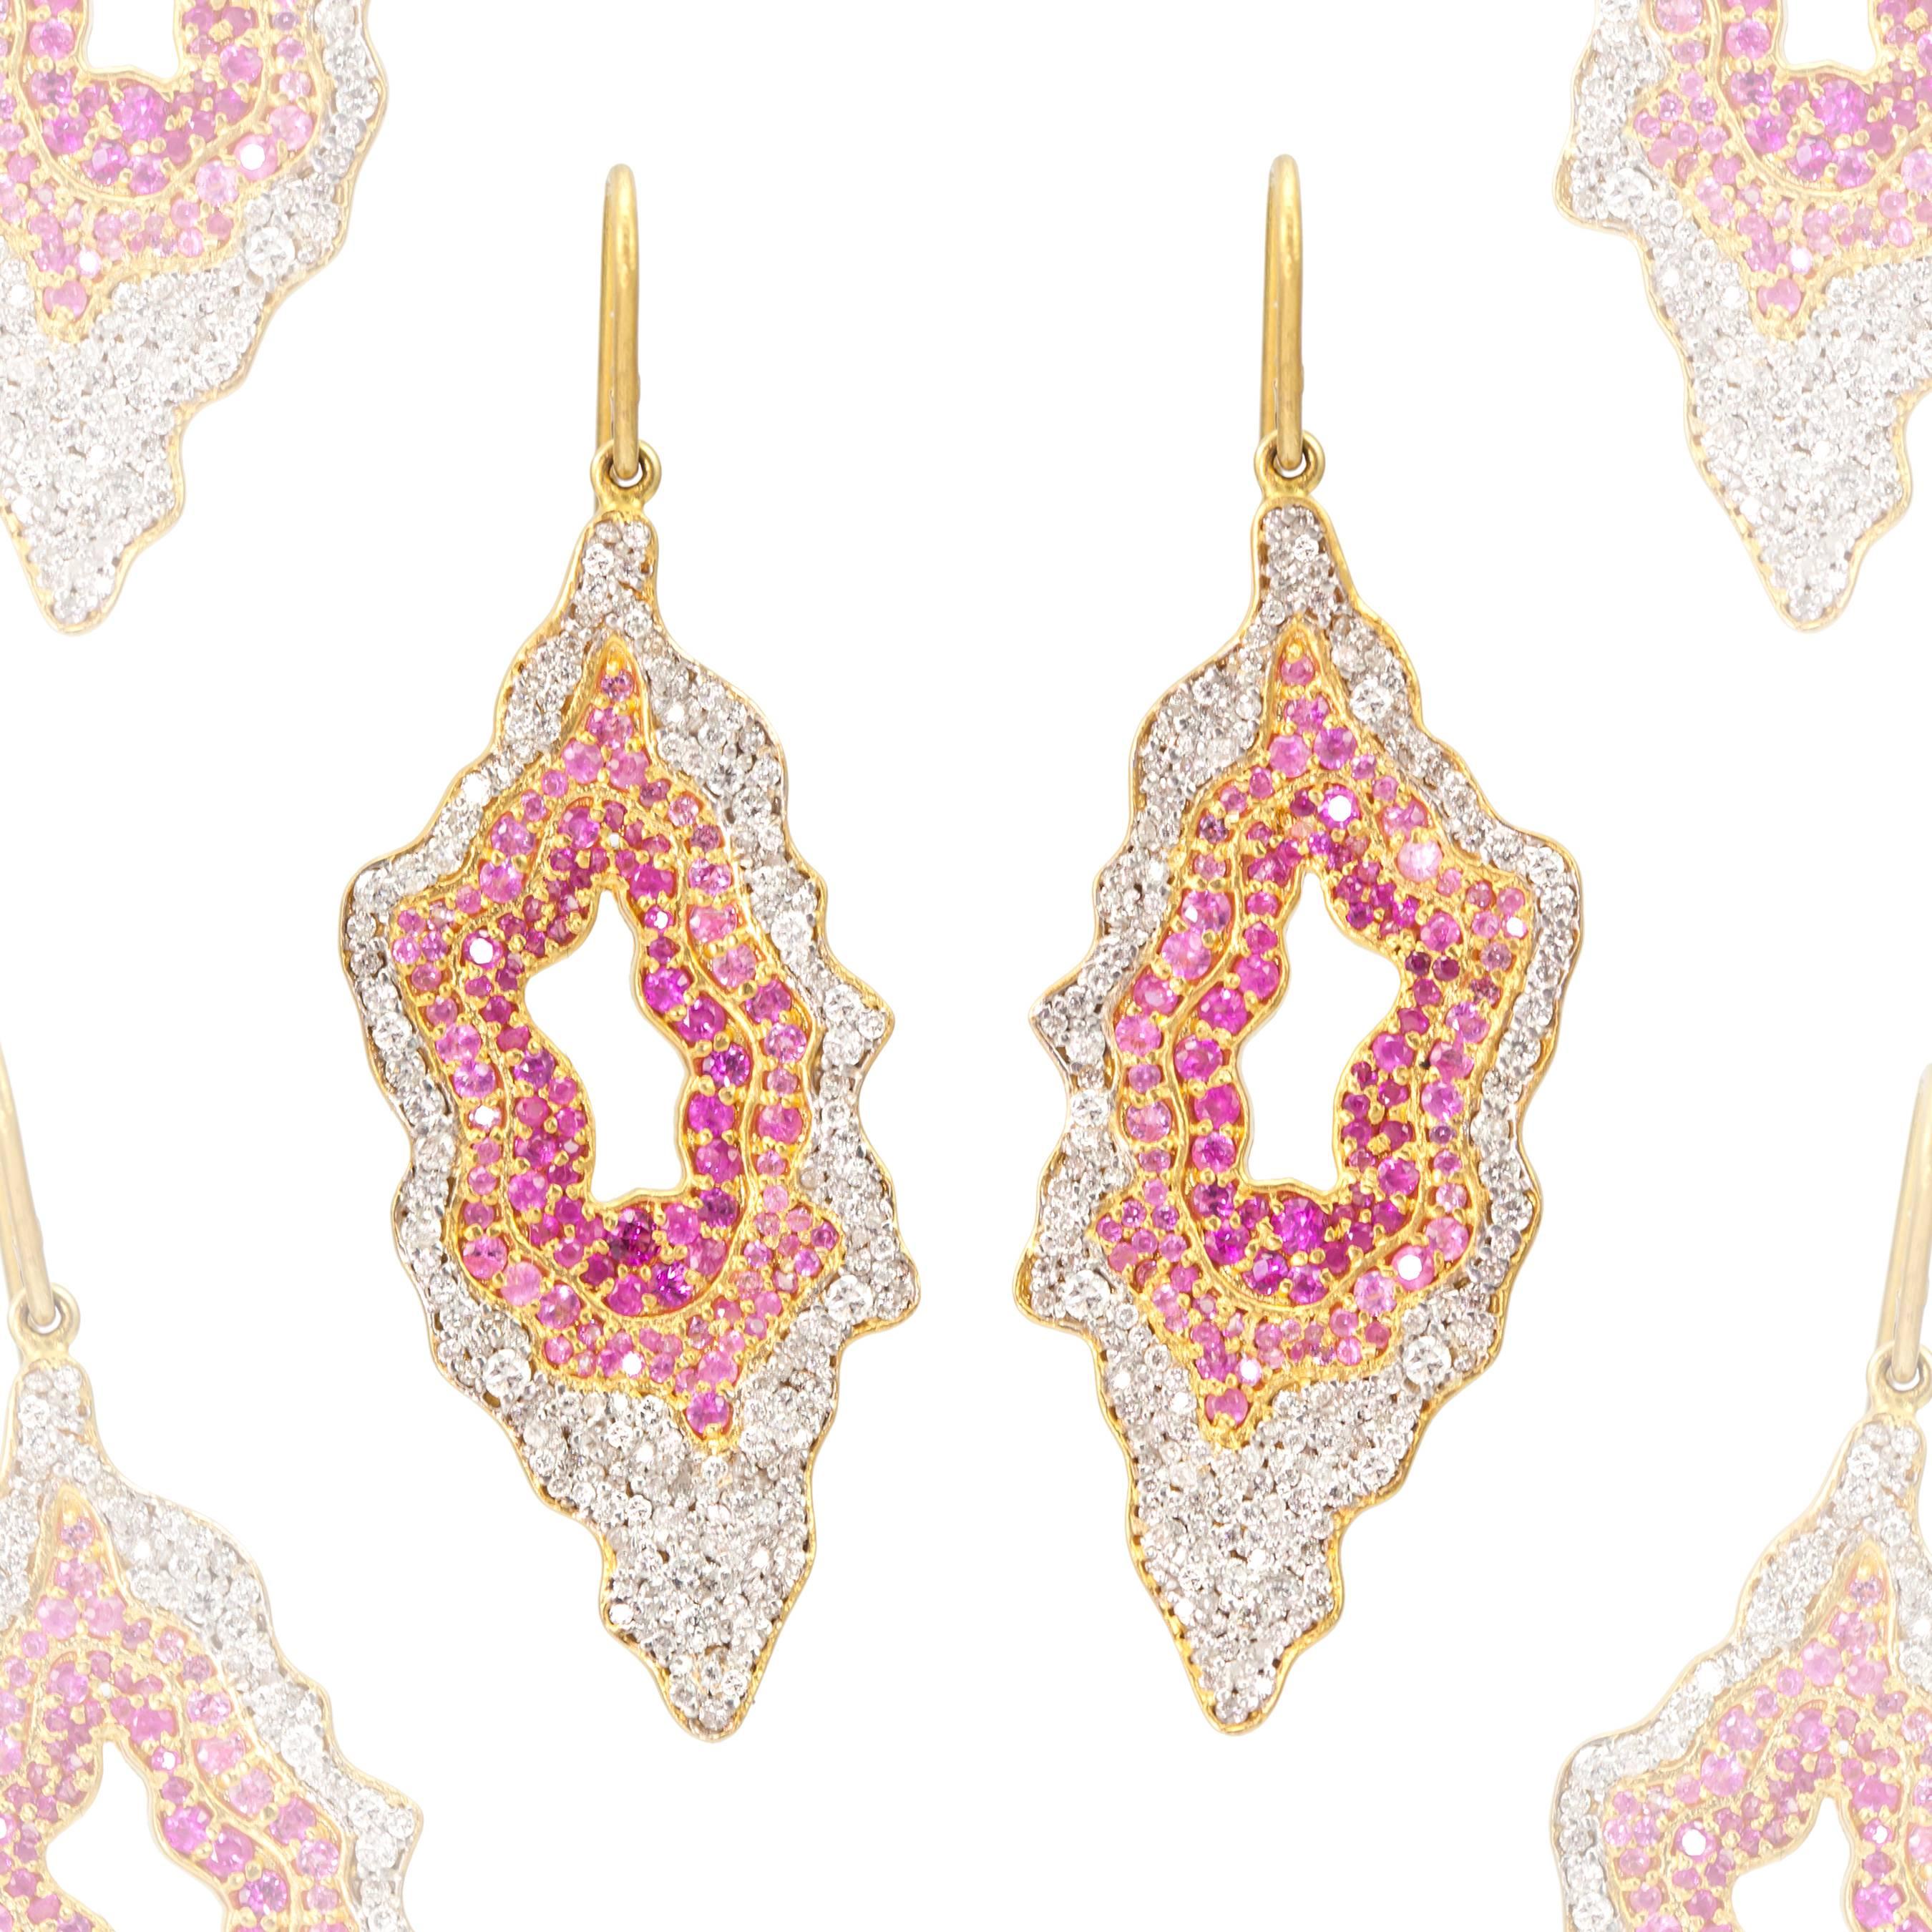 Round Cut Lauren Harper 4.12 Carat Pink and White Sapphire Gold Organic Drop Earrings